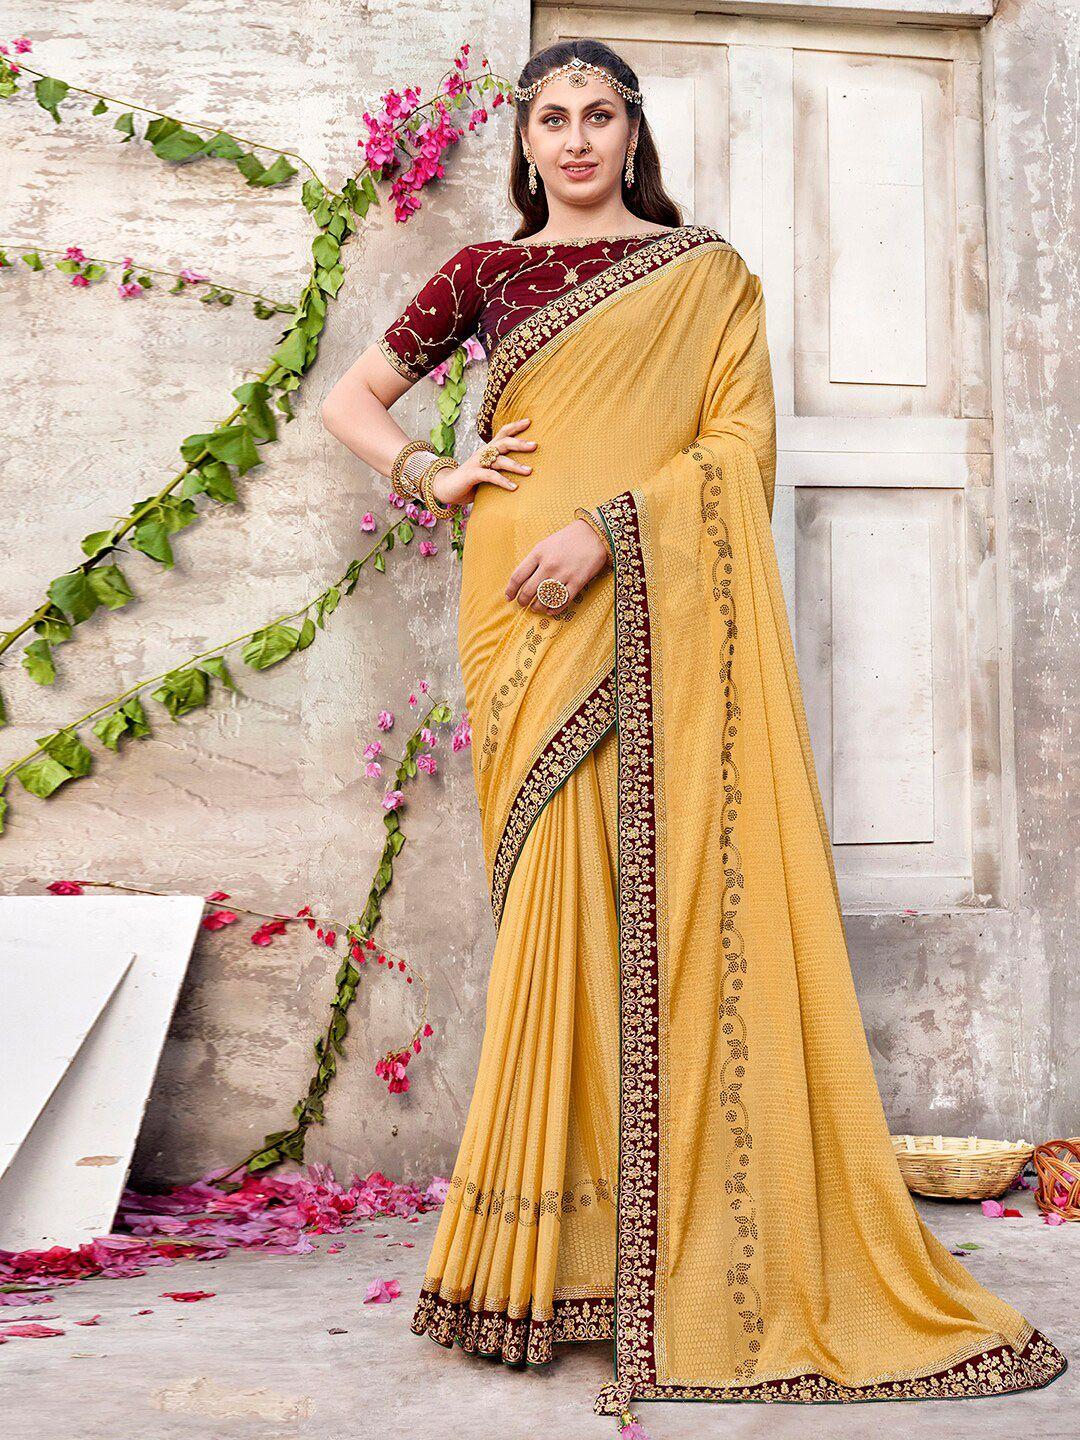 mitera yellow & gold-toned embellished saree